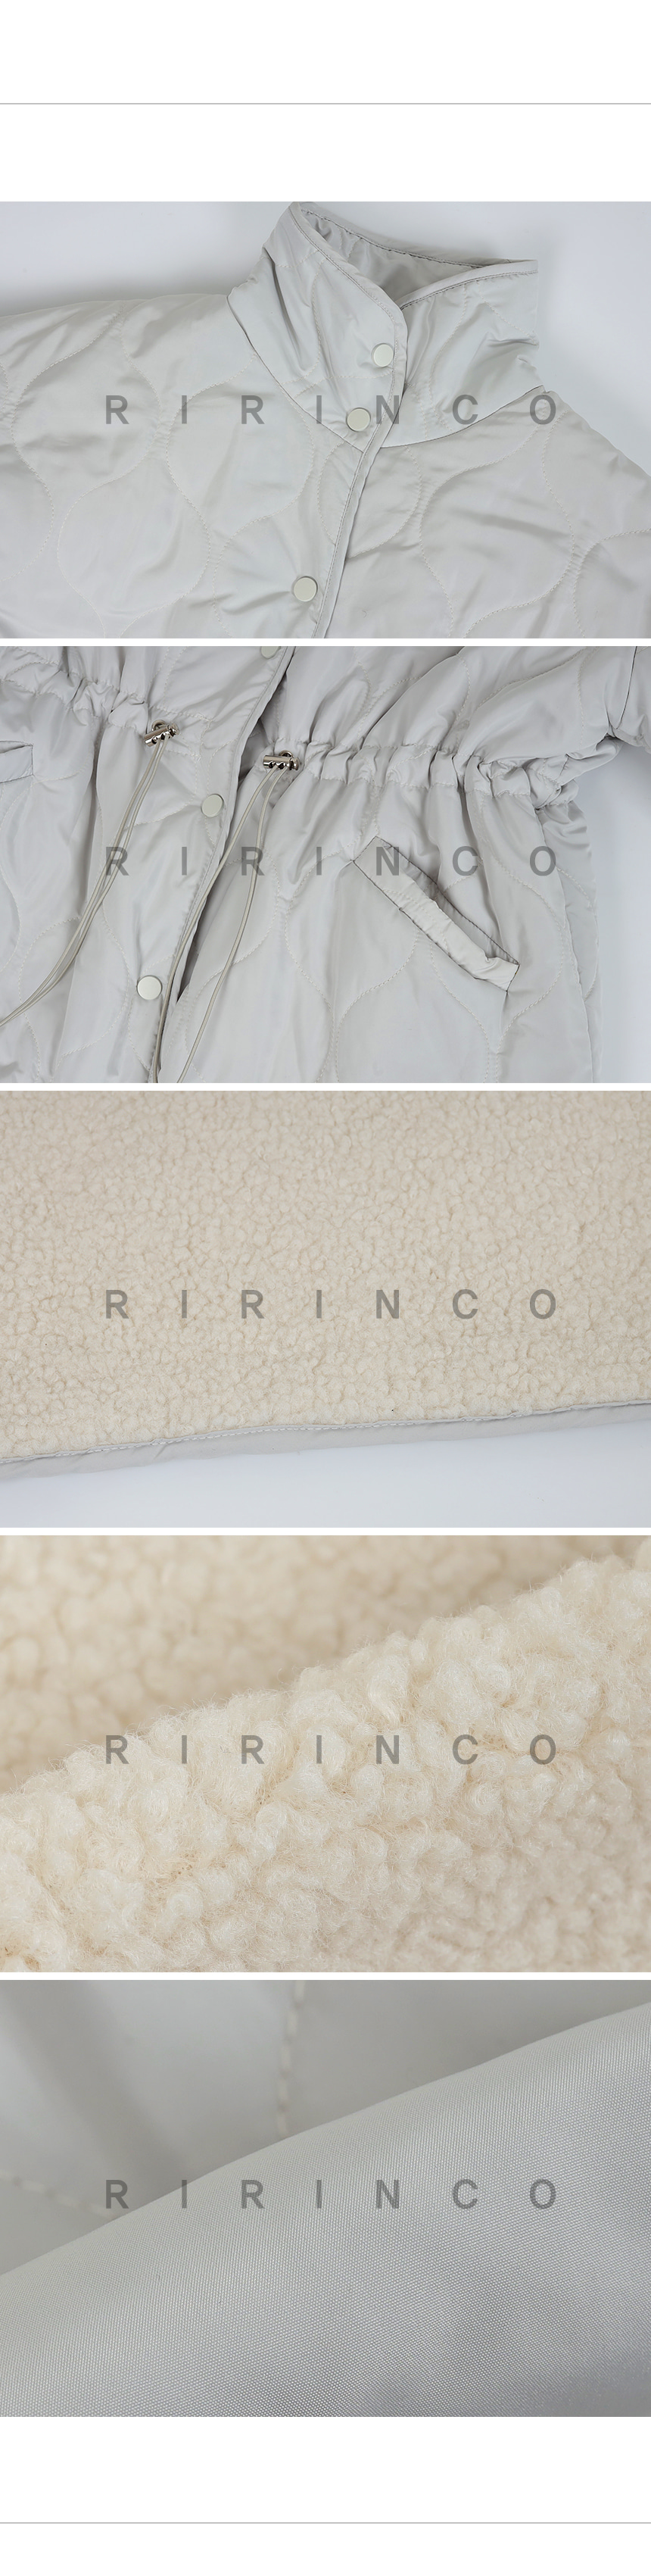 RIRINCO 羊毛裏地ストリングジャンパー